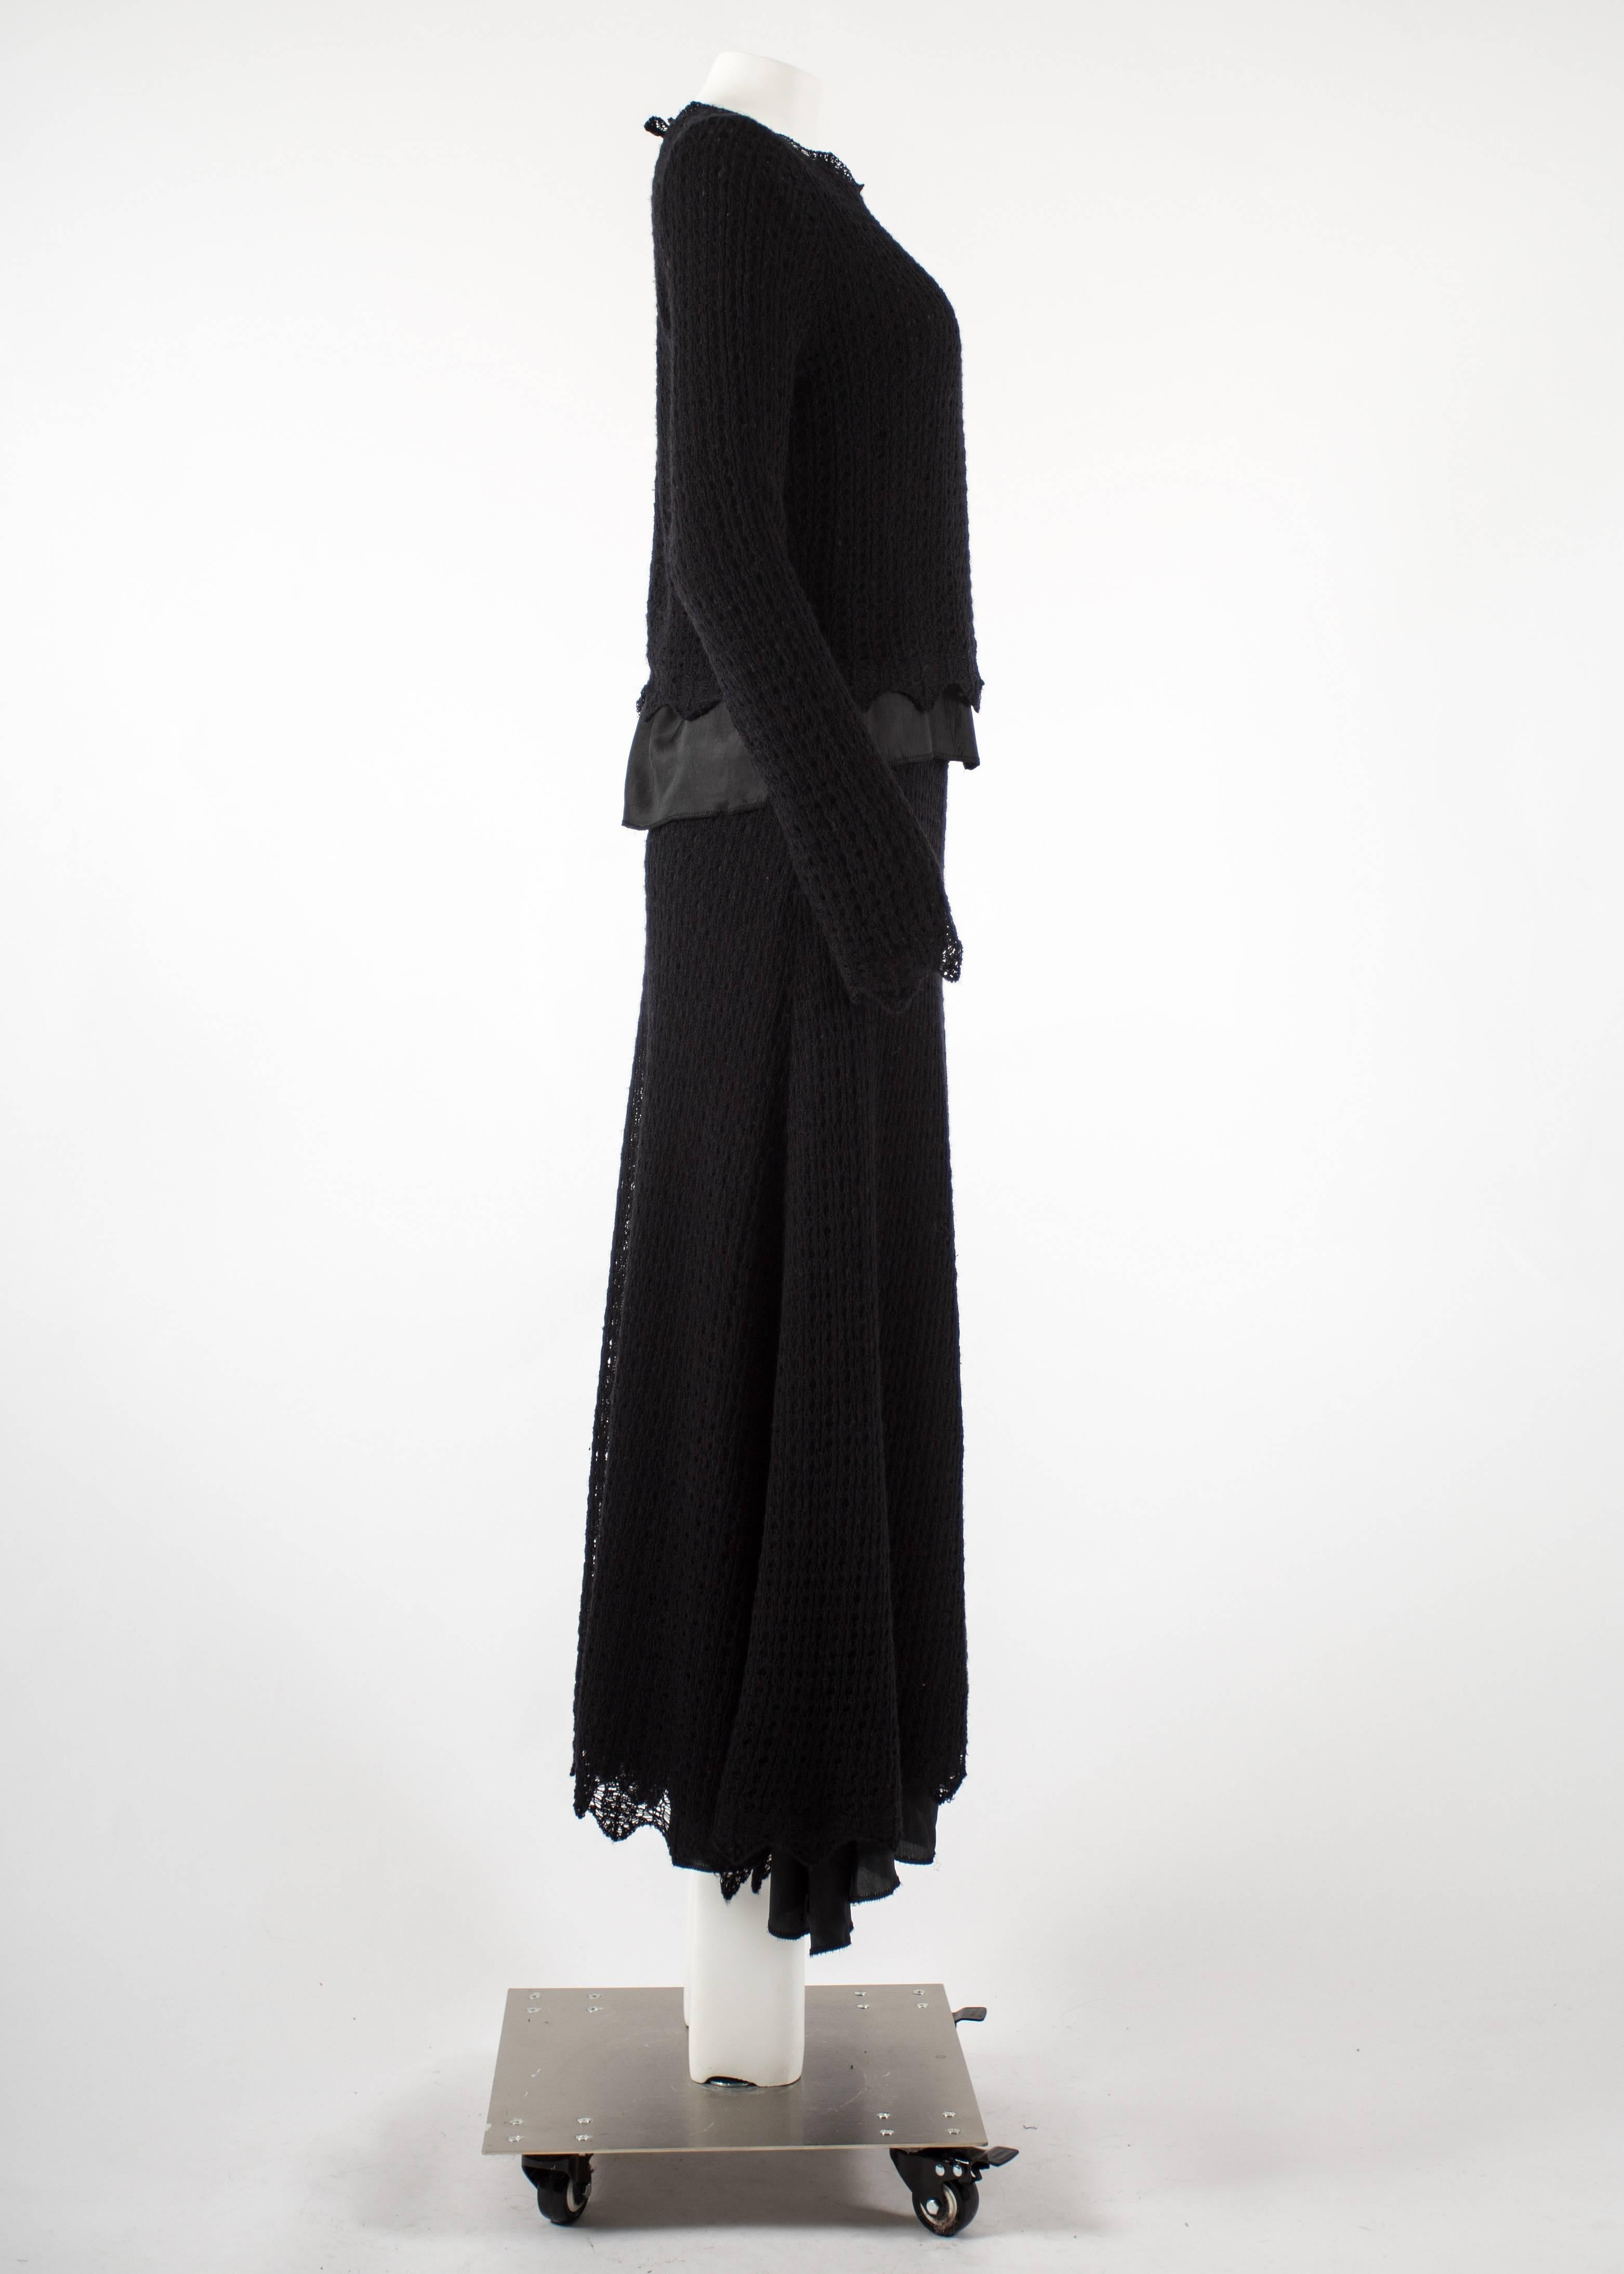 Maison Martin Margiela early 1990s black crochet wool and satin skirt suit 1